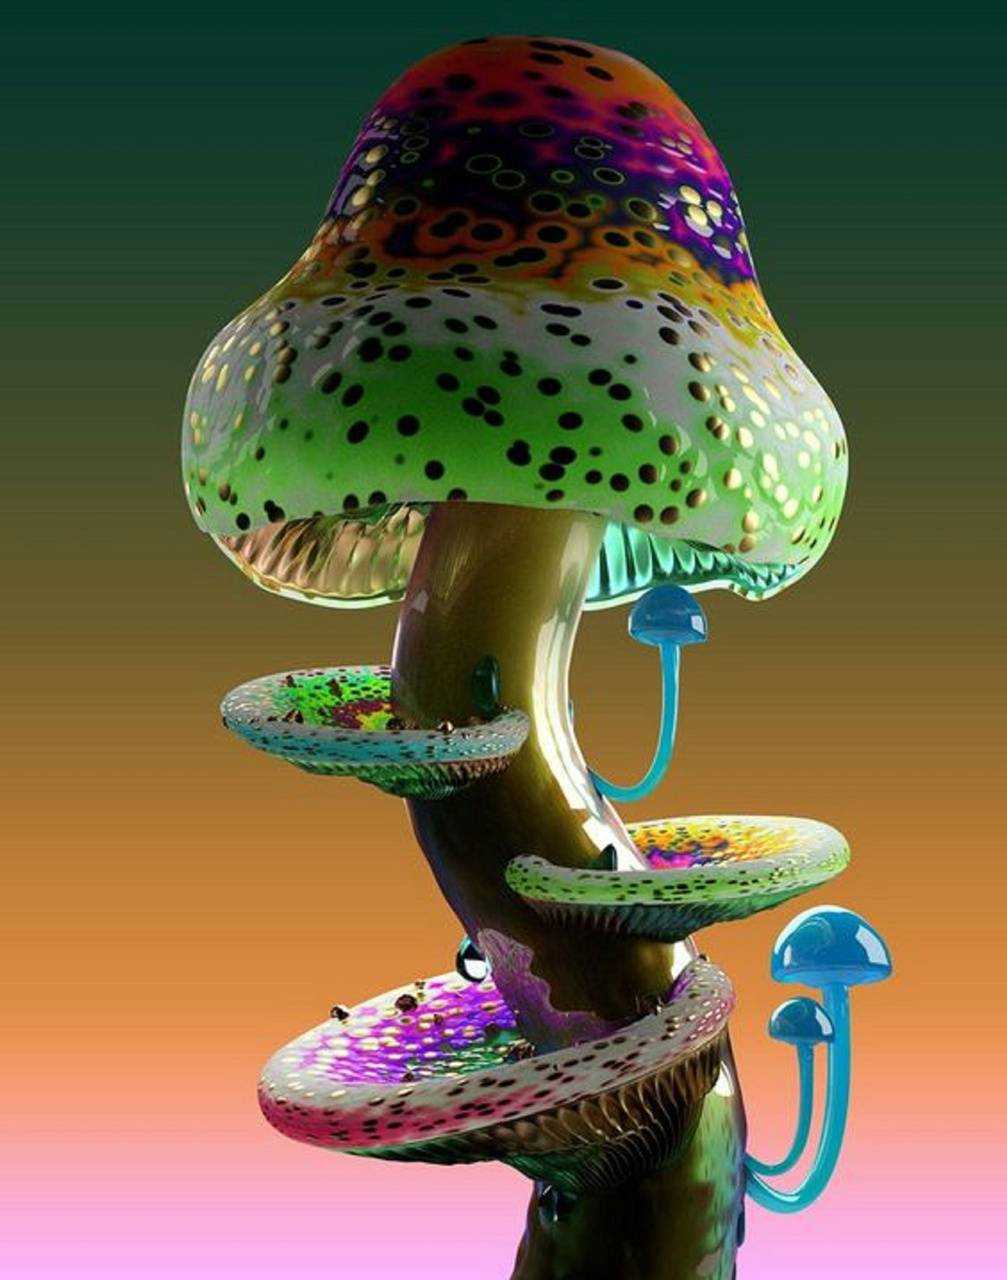 Download Mushroom Fantasy Shrooms RoyaltyFree Stock Illustration Image   Pixabay